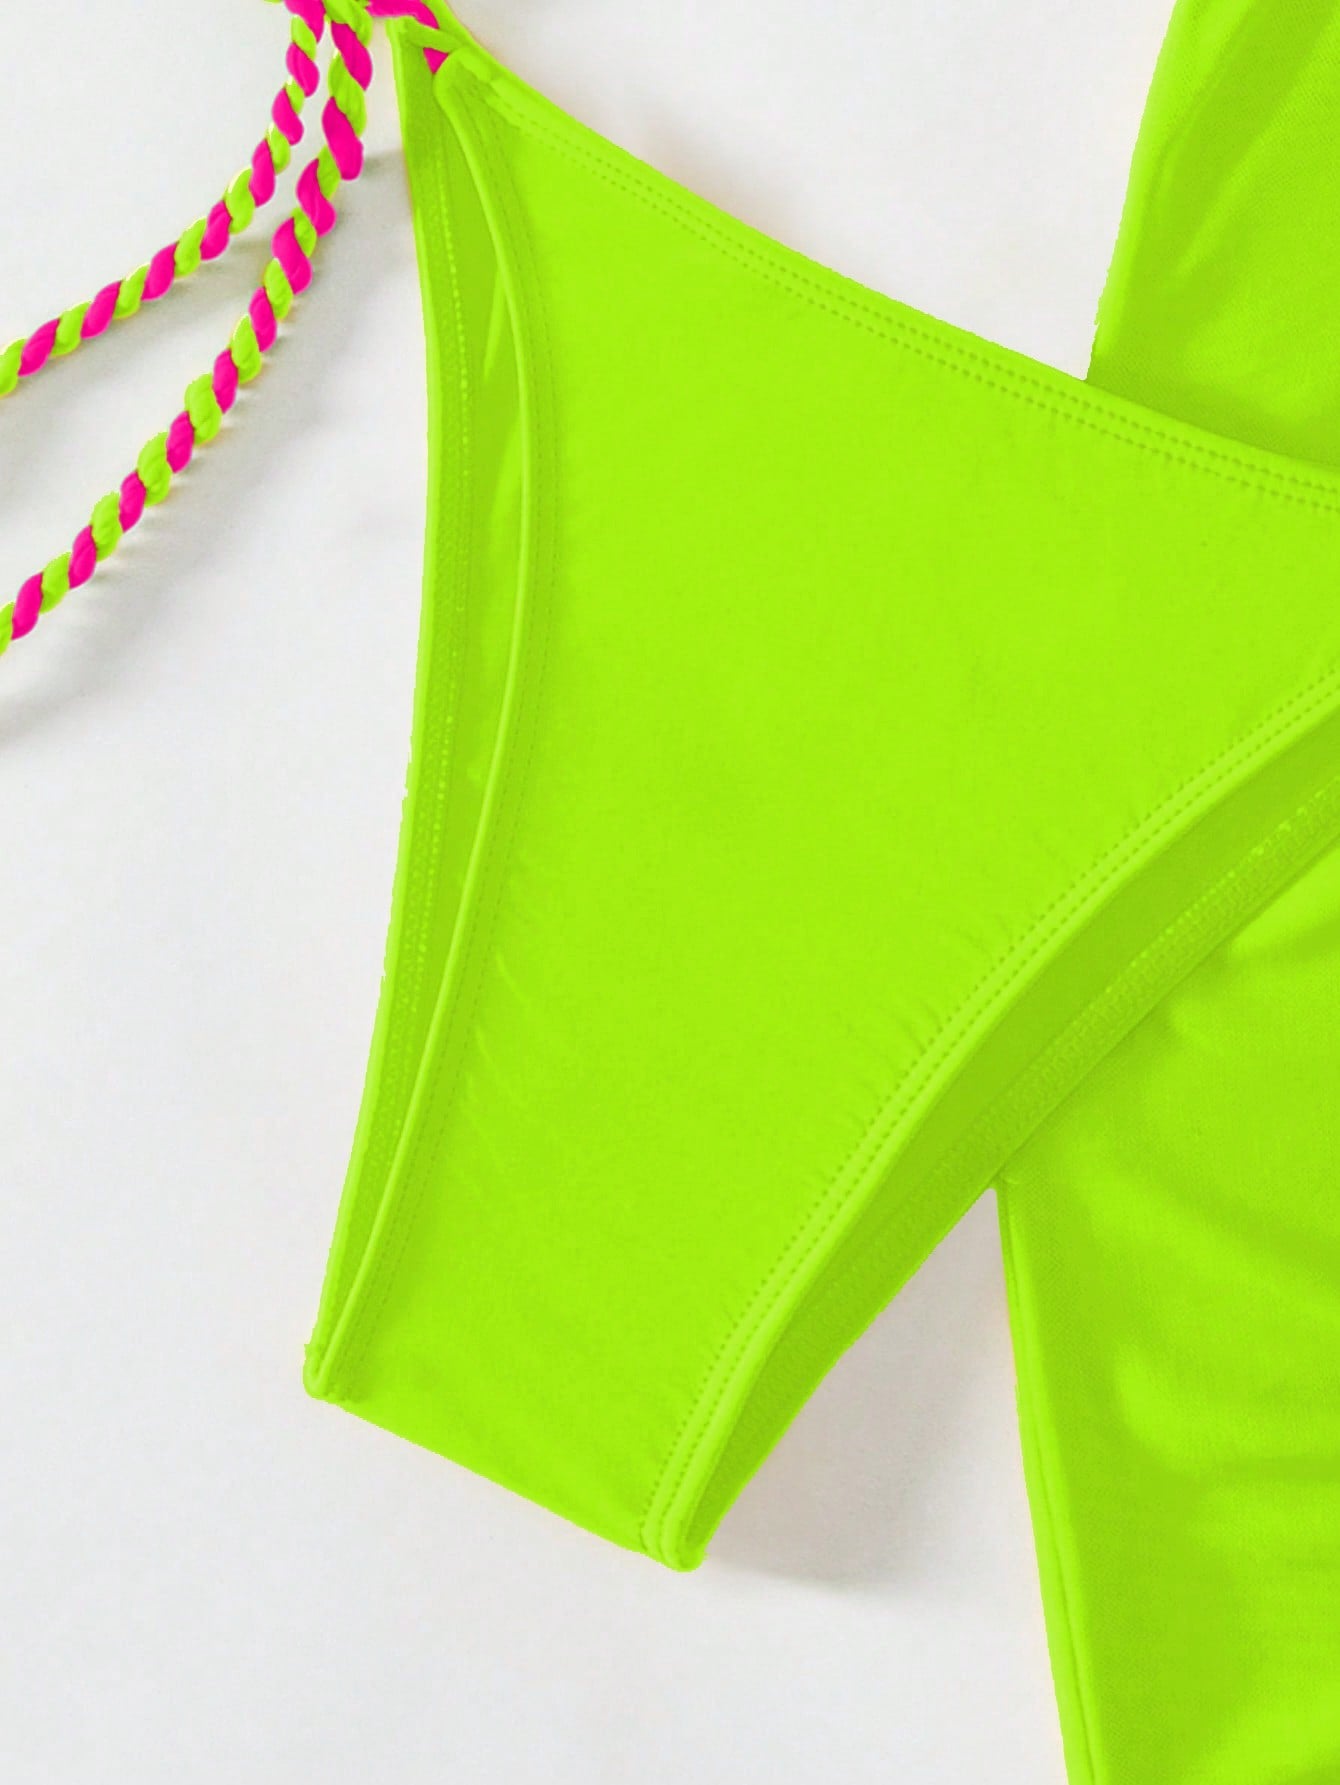 Colorblock Halter Triangle Bikini Swimsuit With Beach Skirt